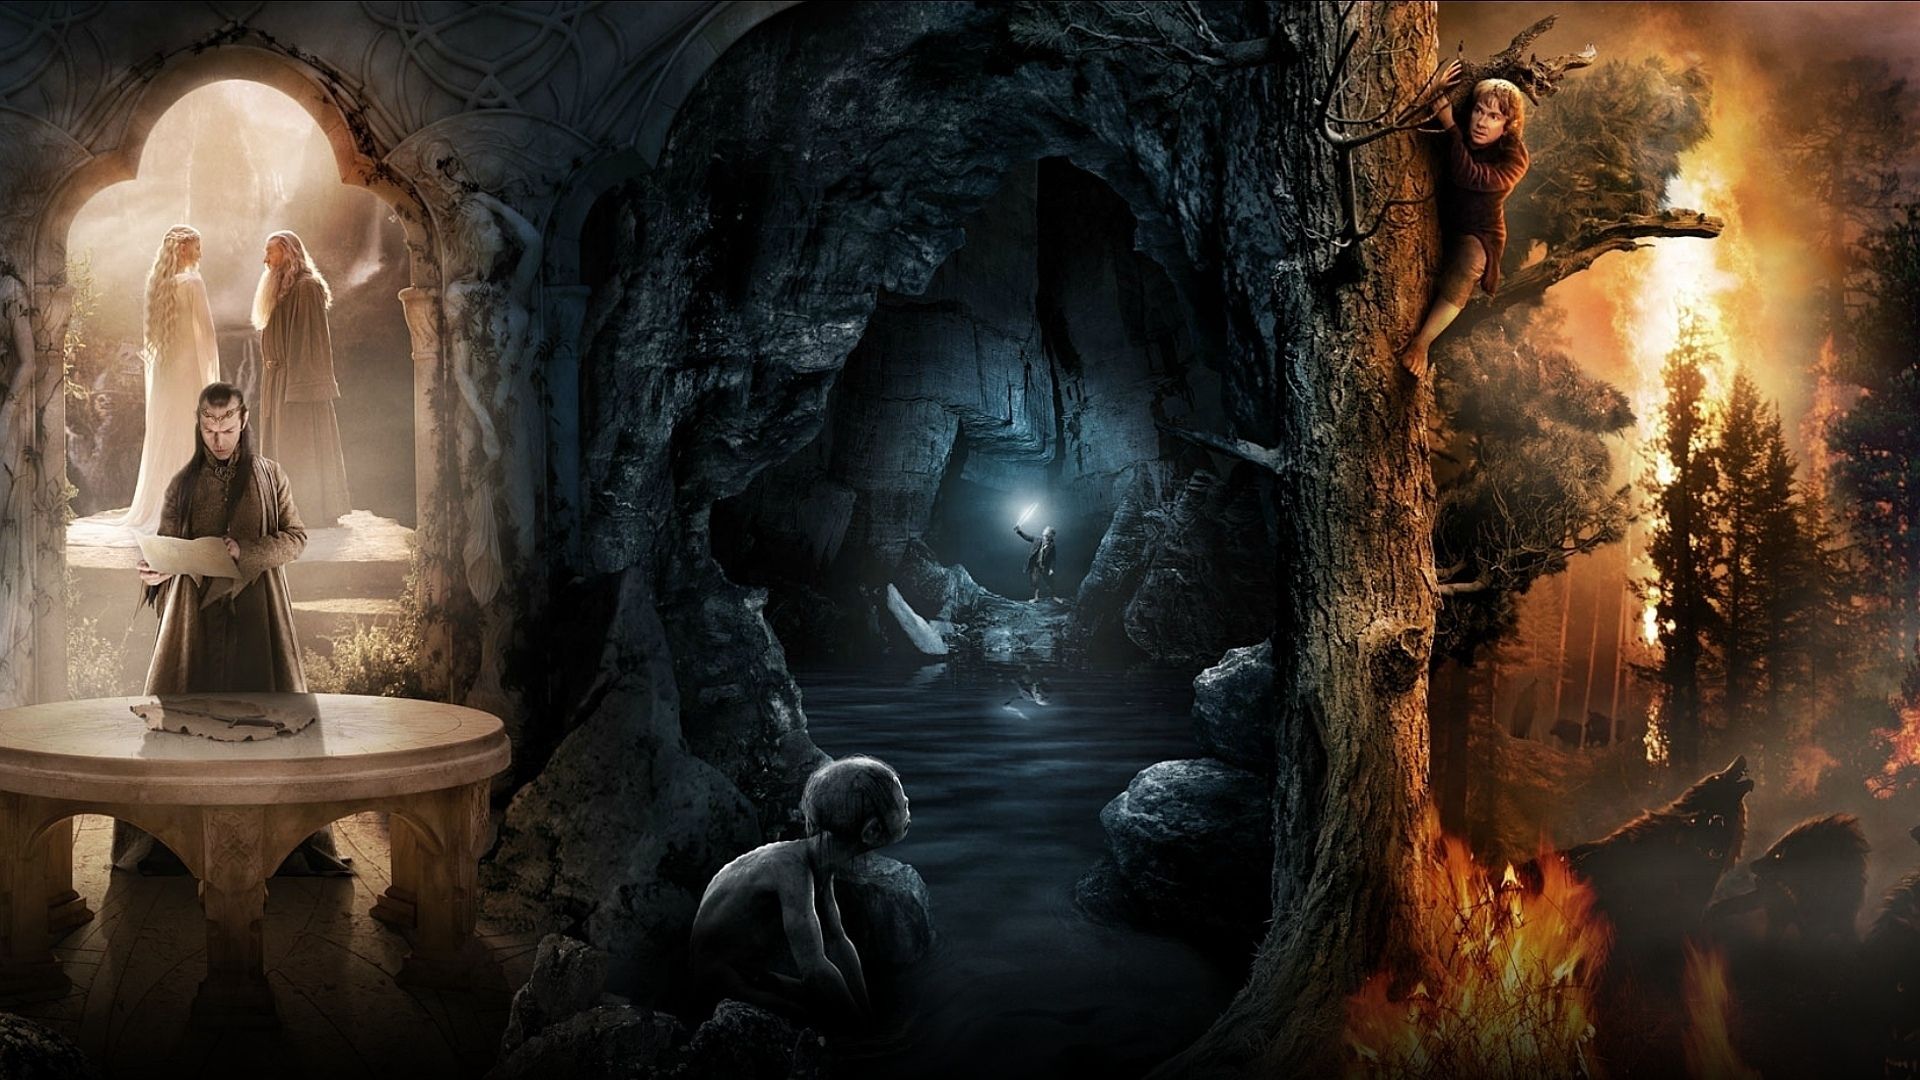 Movies The Hobbit The Hobbit: An Unexpected Journey wallpaper ...